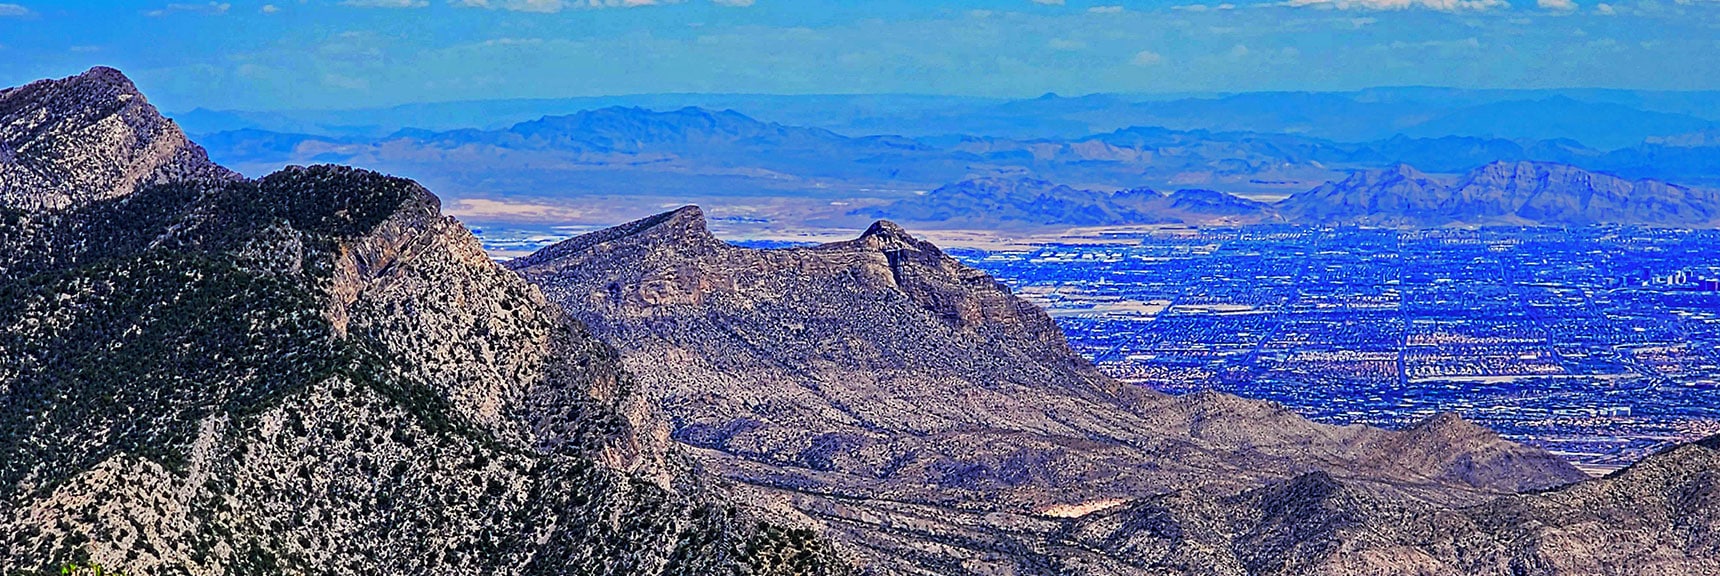 La Madre Mts., Damsel Peak, Muddy Mts., Sunrise Mt., Frenchman Mt., Las Vegas Valley.| Wilson Ridge Lower Loop | Lovell Canyon, Nevada